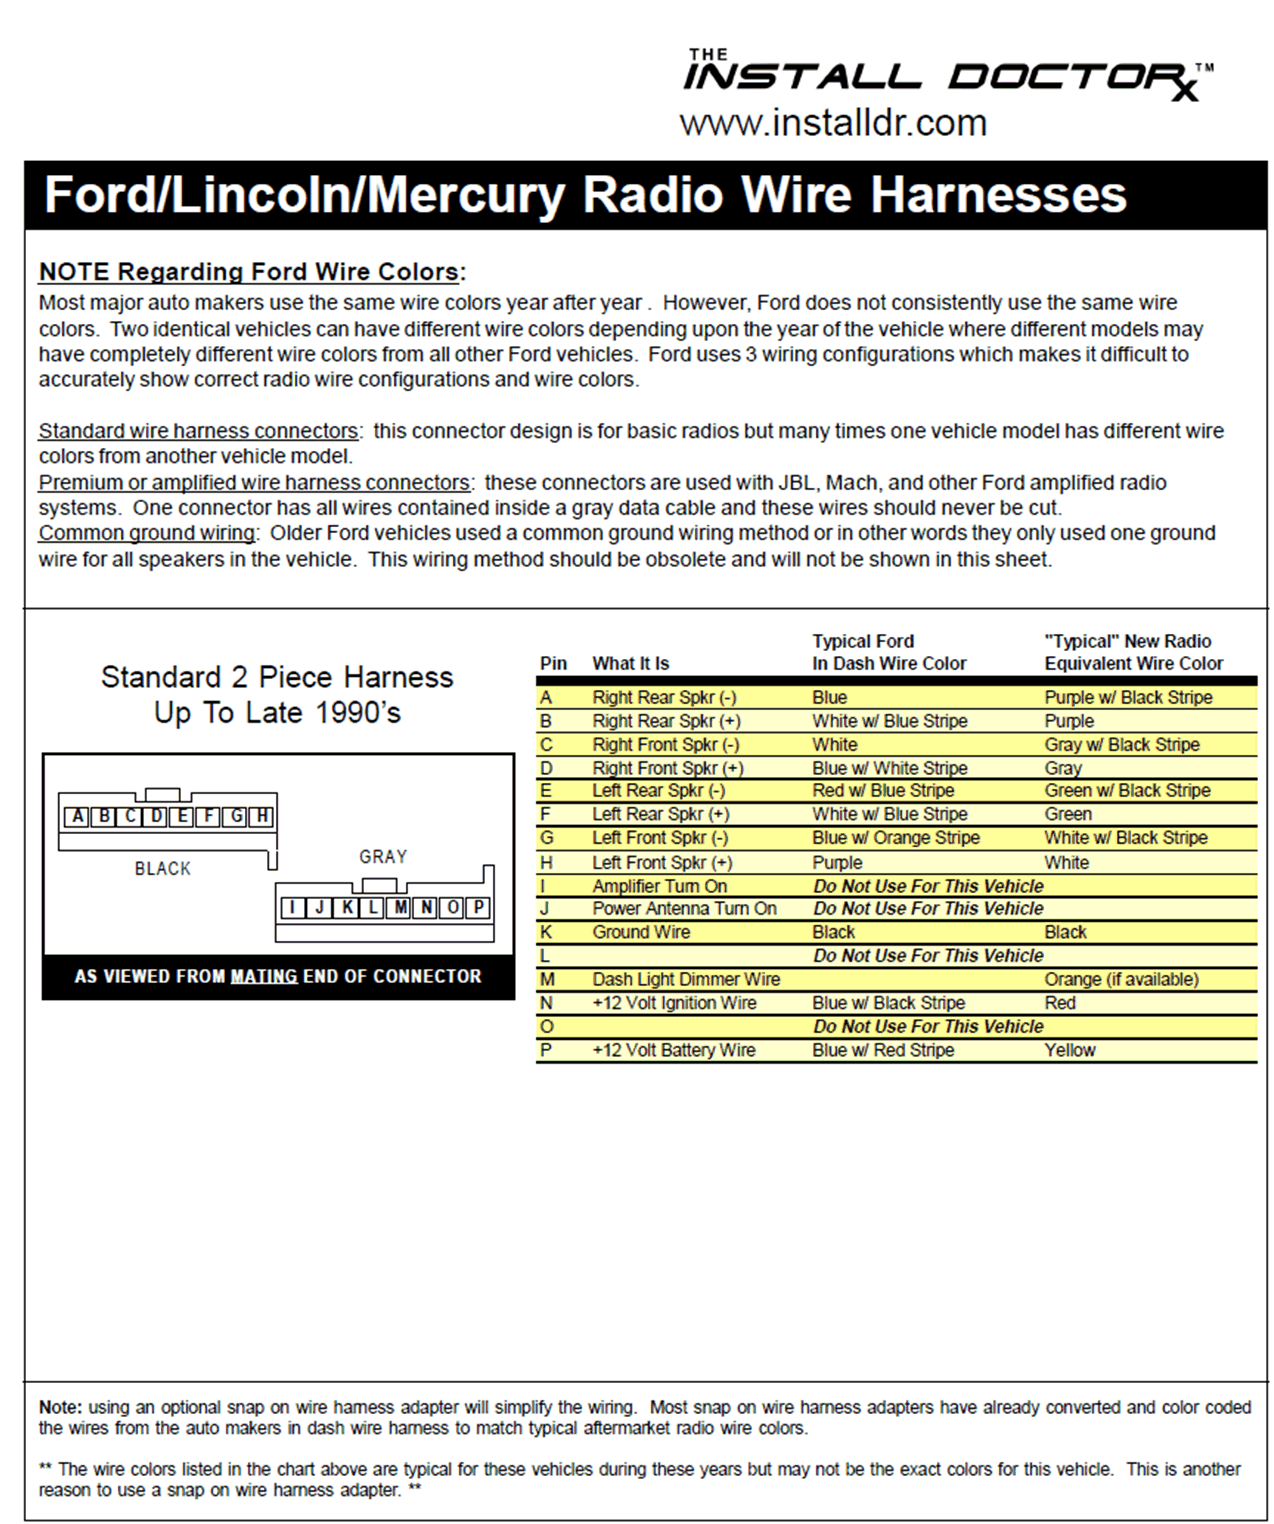 ford-radio-harness-wiring-gif.68894